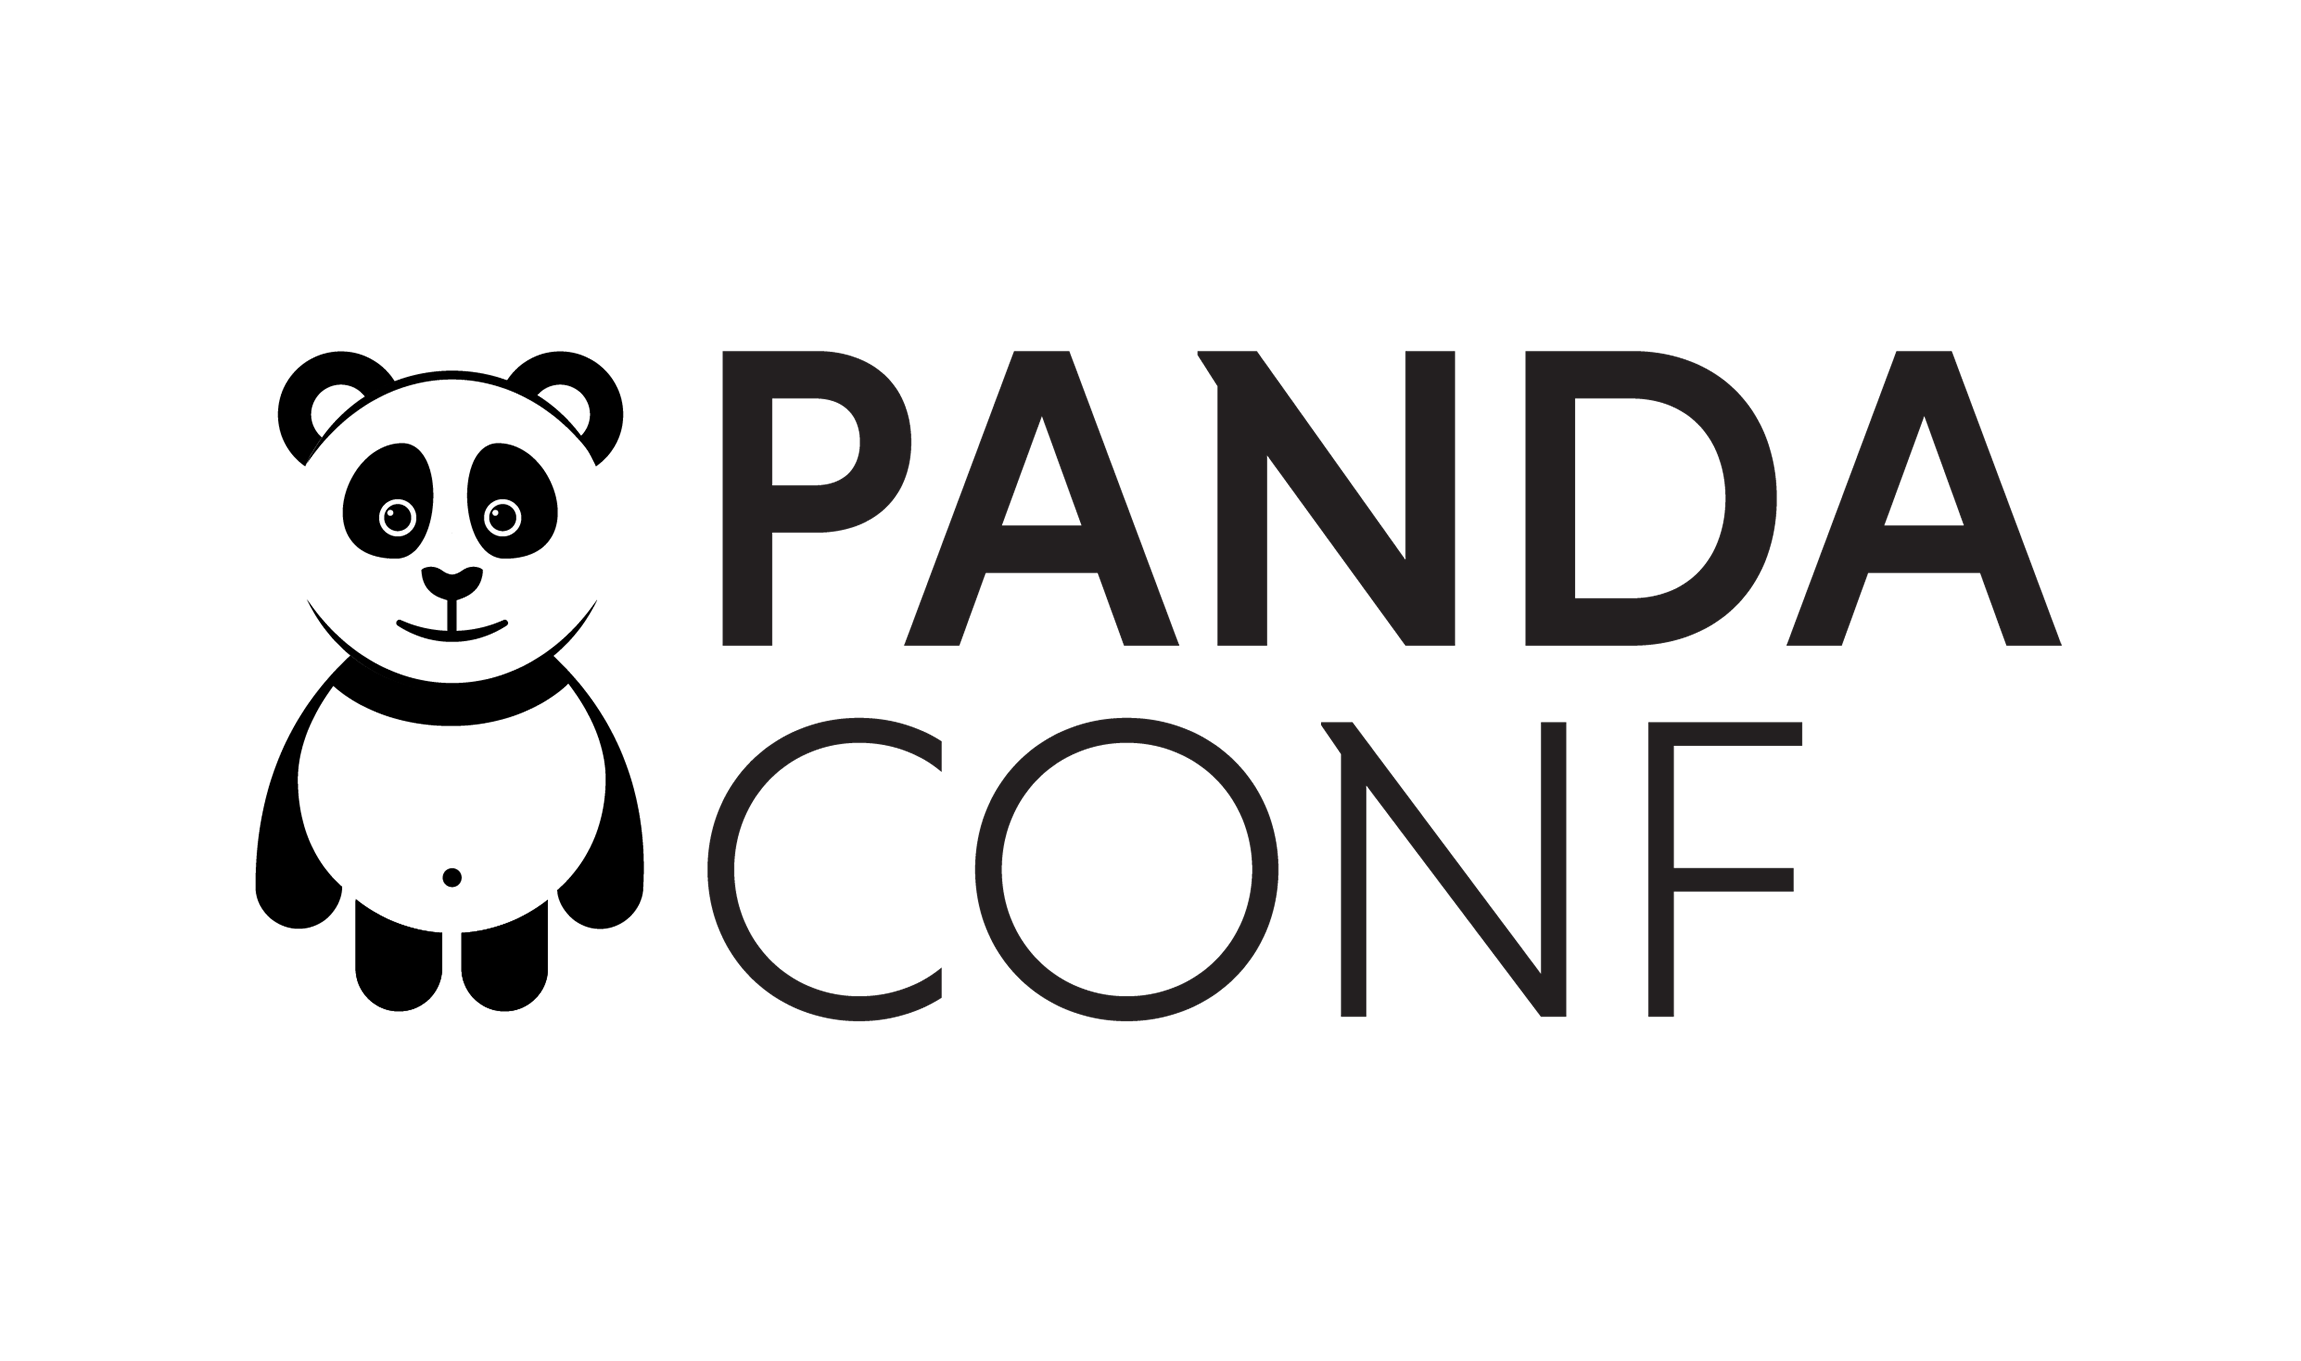 pandaconf logo